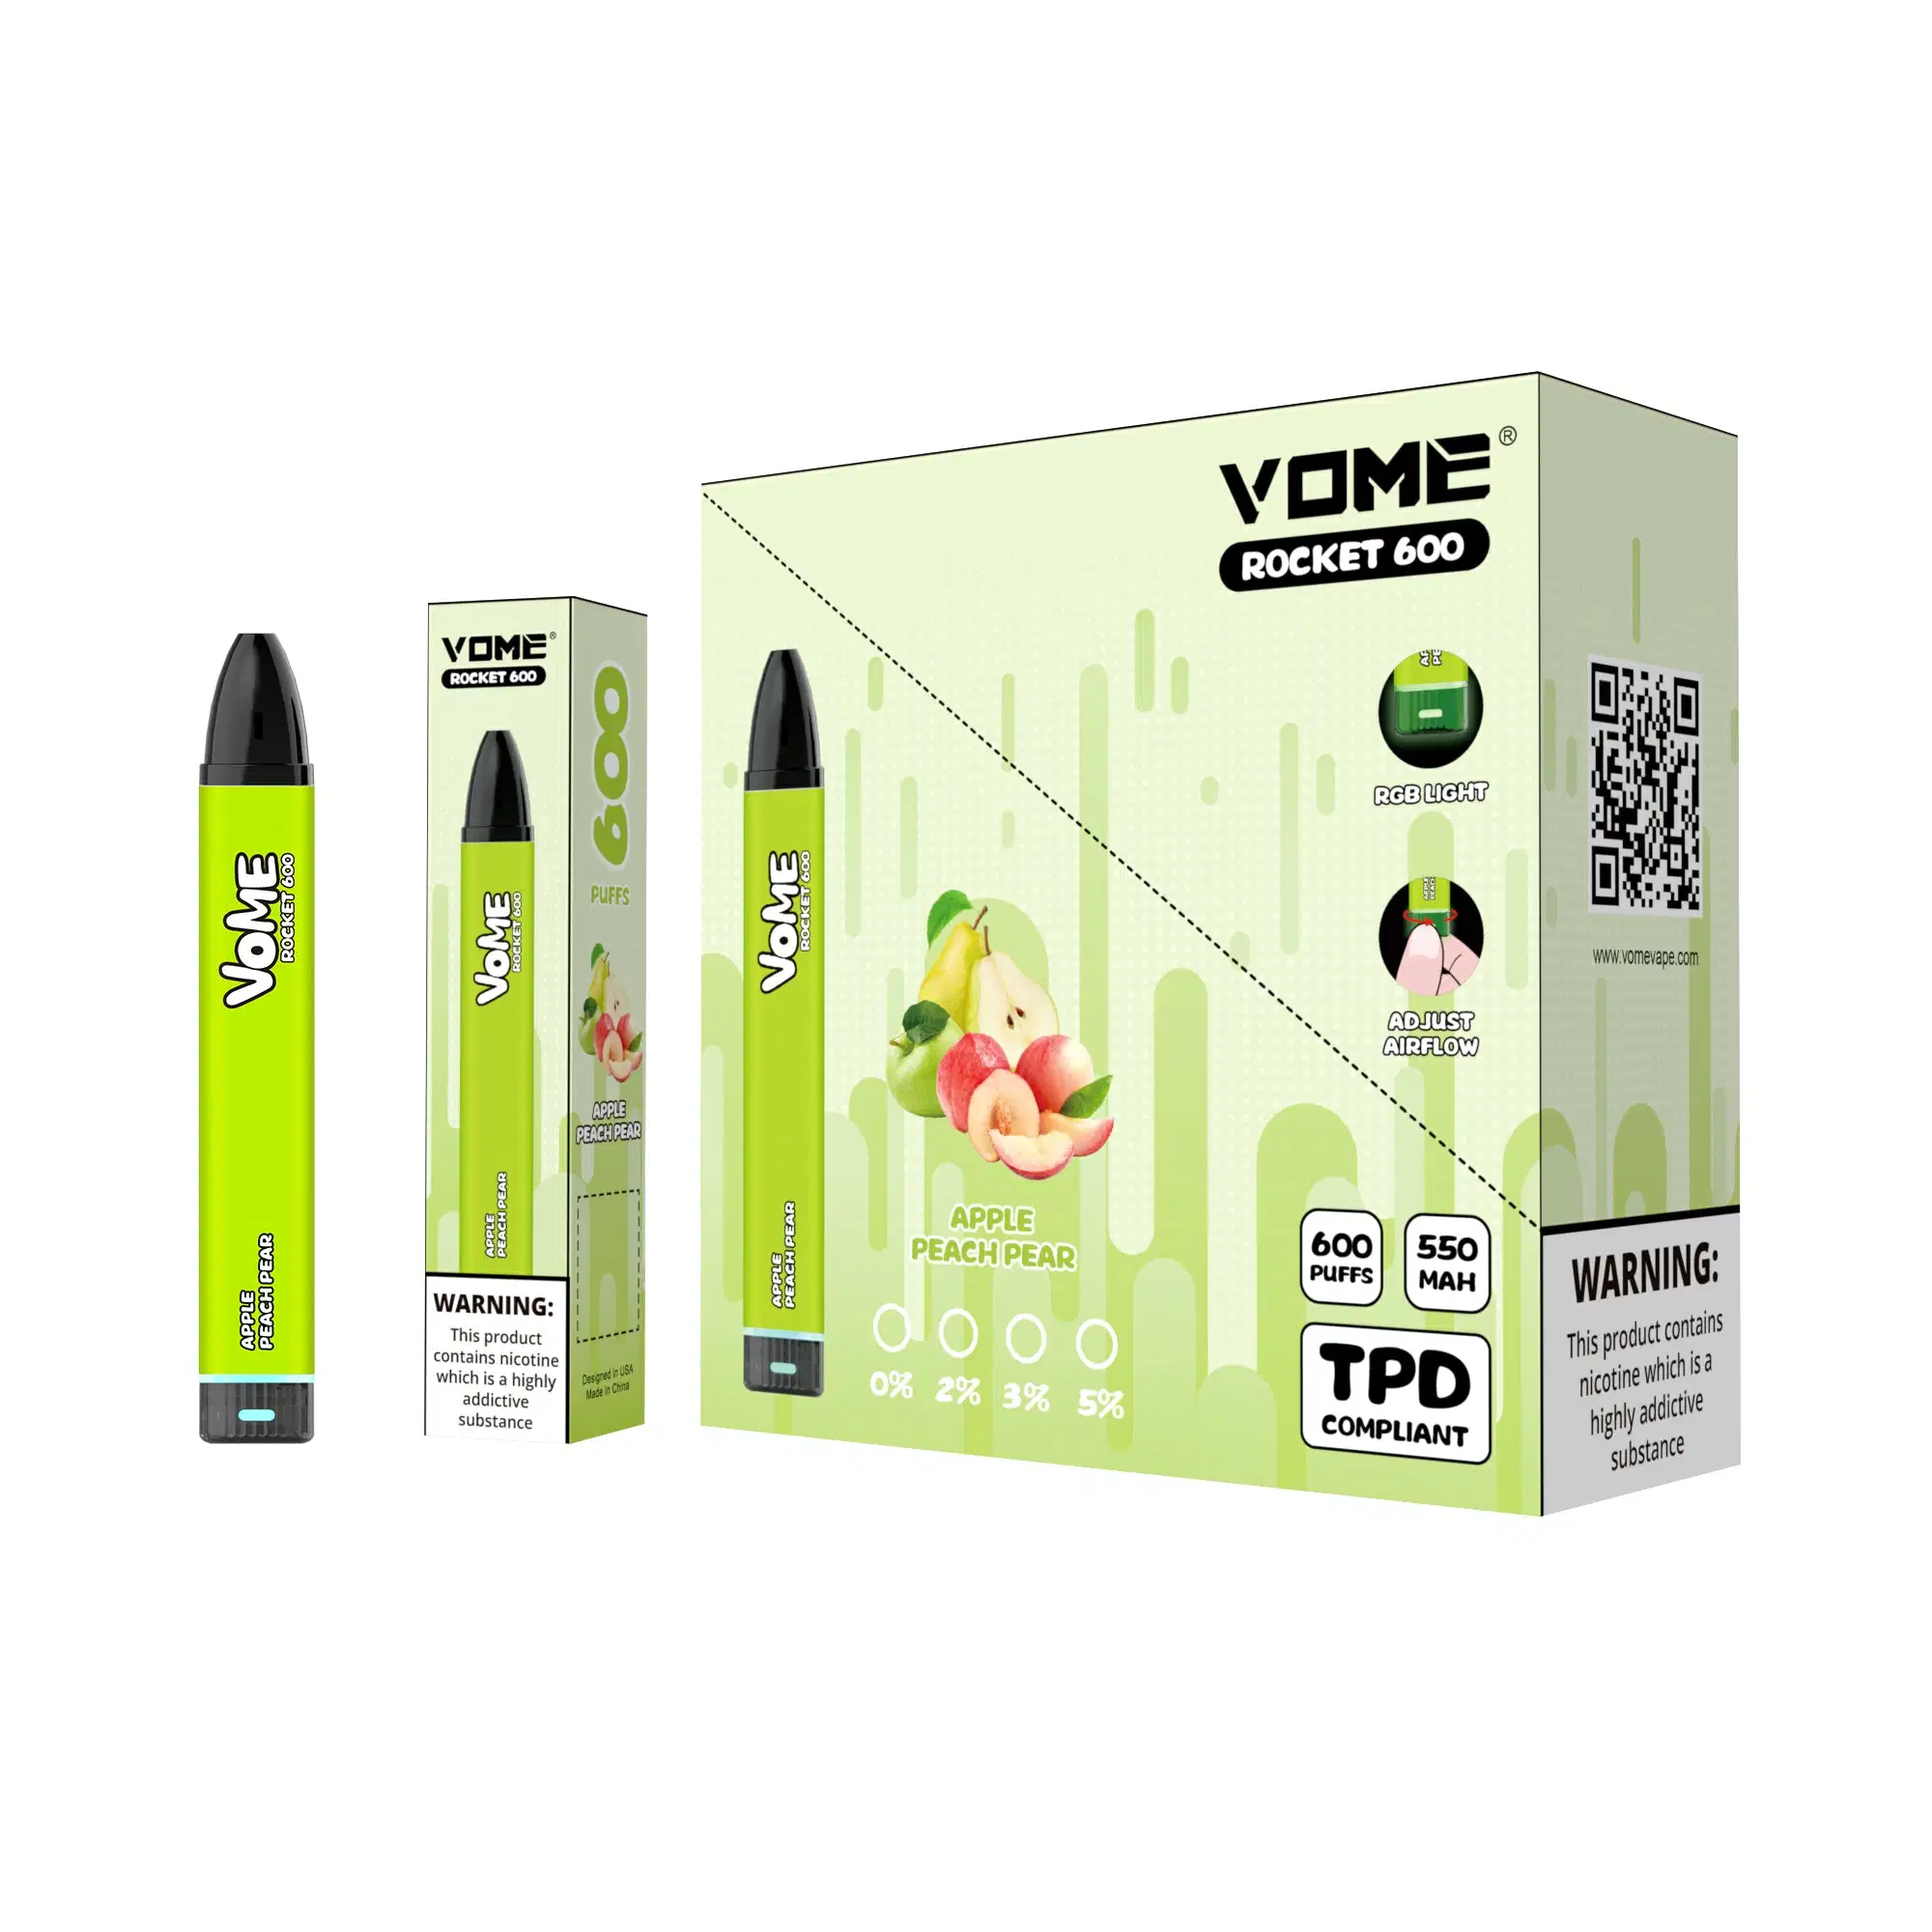 Vome Rocket 600 Puffs Airflow Control Disposable Vape Pod Device Tpd